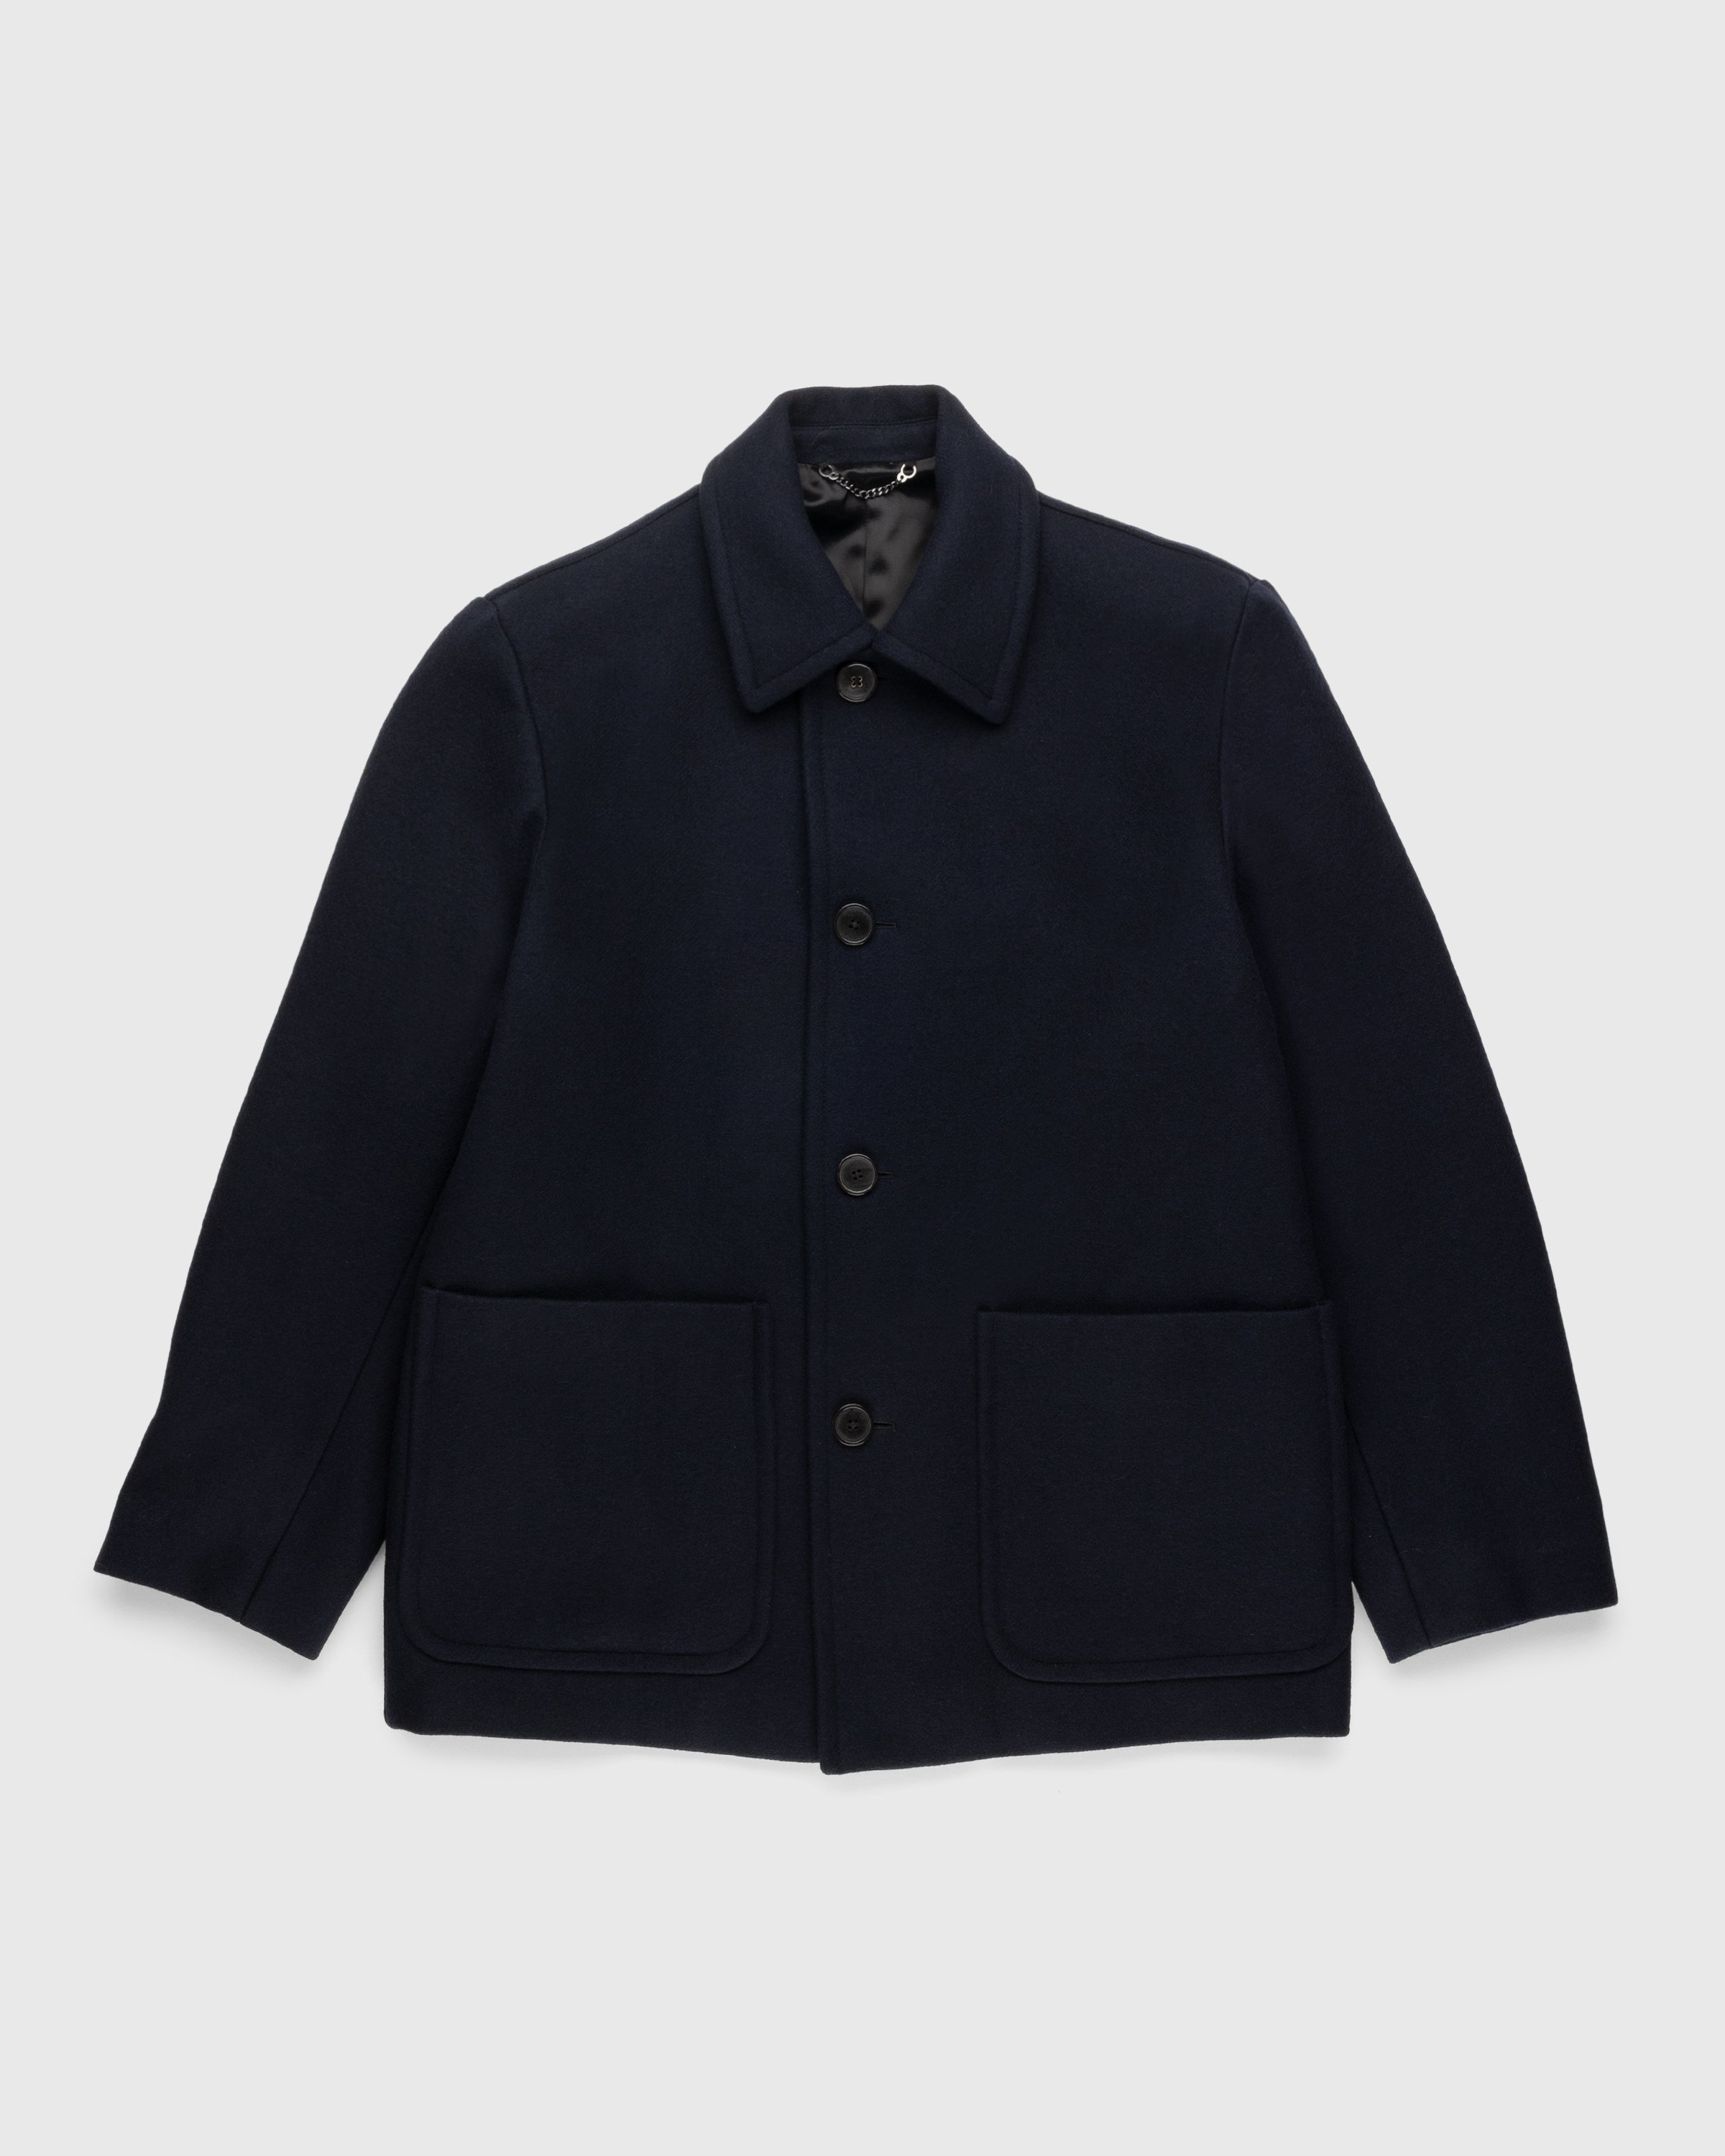 Dries van Noten – Ronnor Workwear Jacket Navy - Outerwear - Blue - Image 1